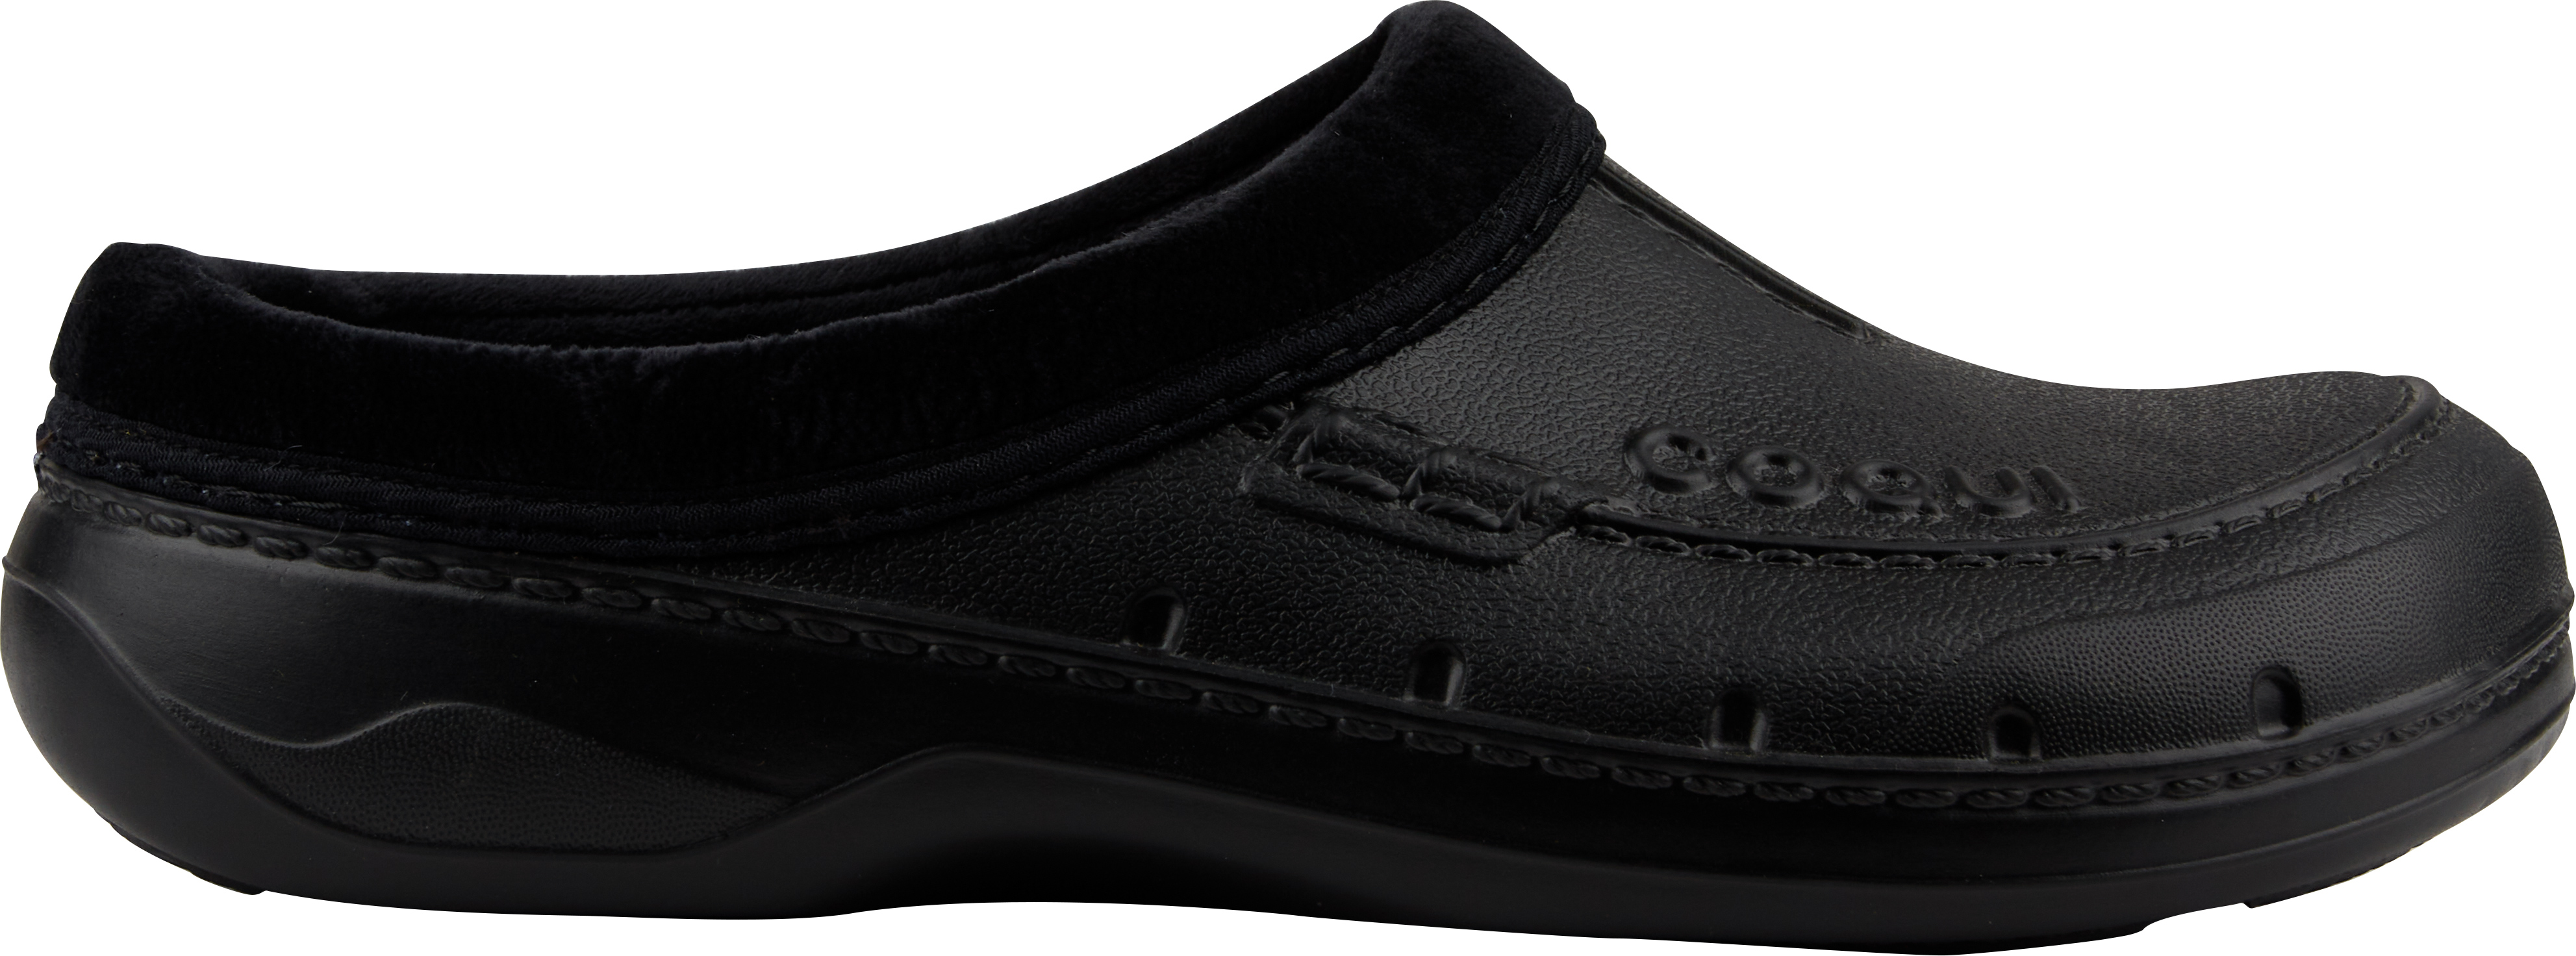 Coqui Dámské pantofle Husky Black 9761-900-2222 40-41